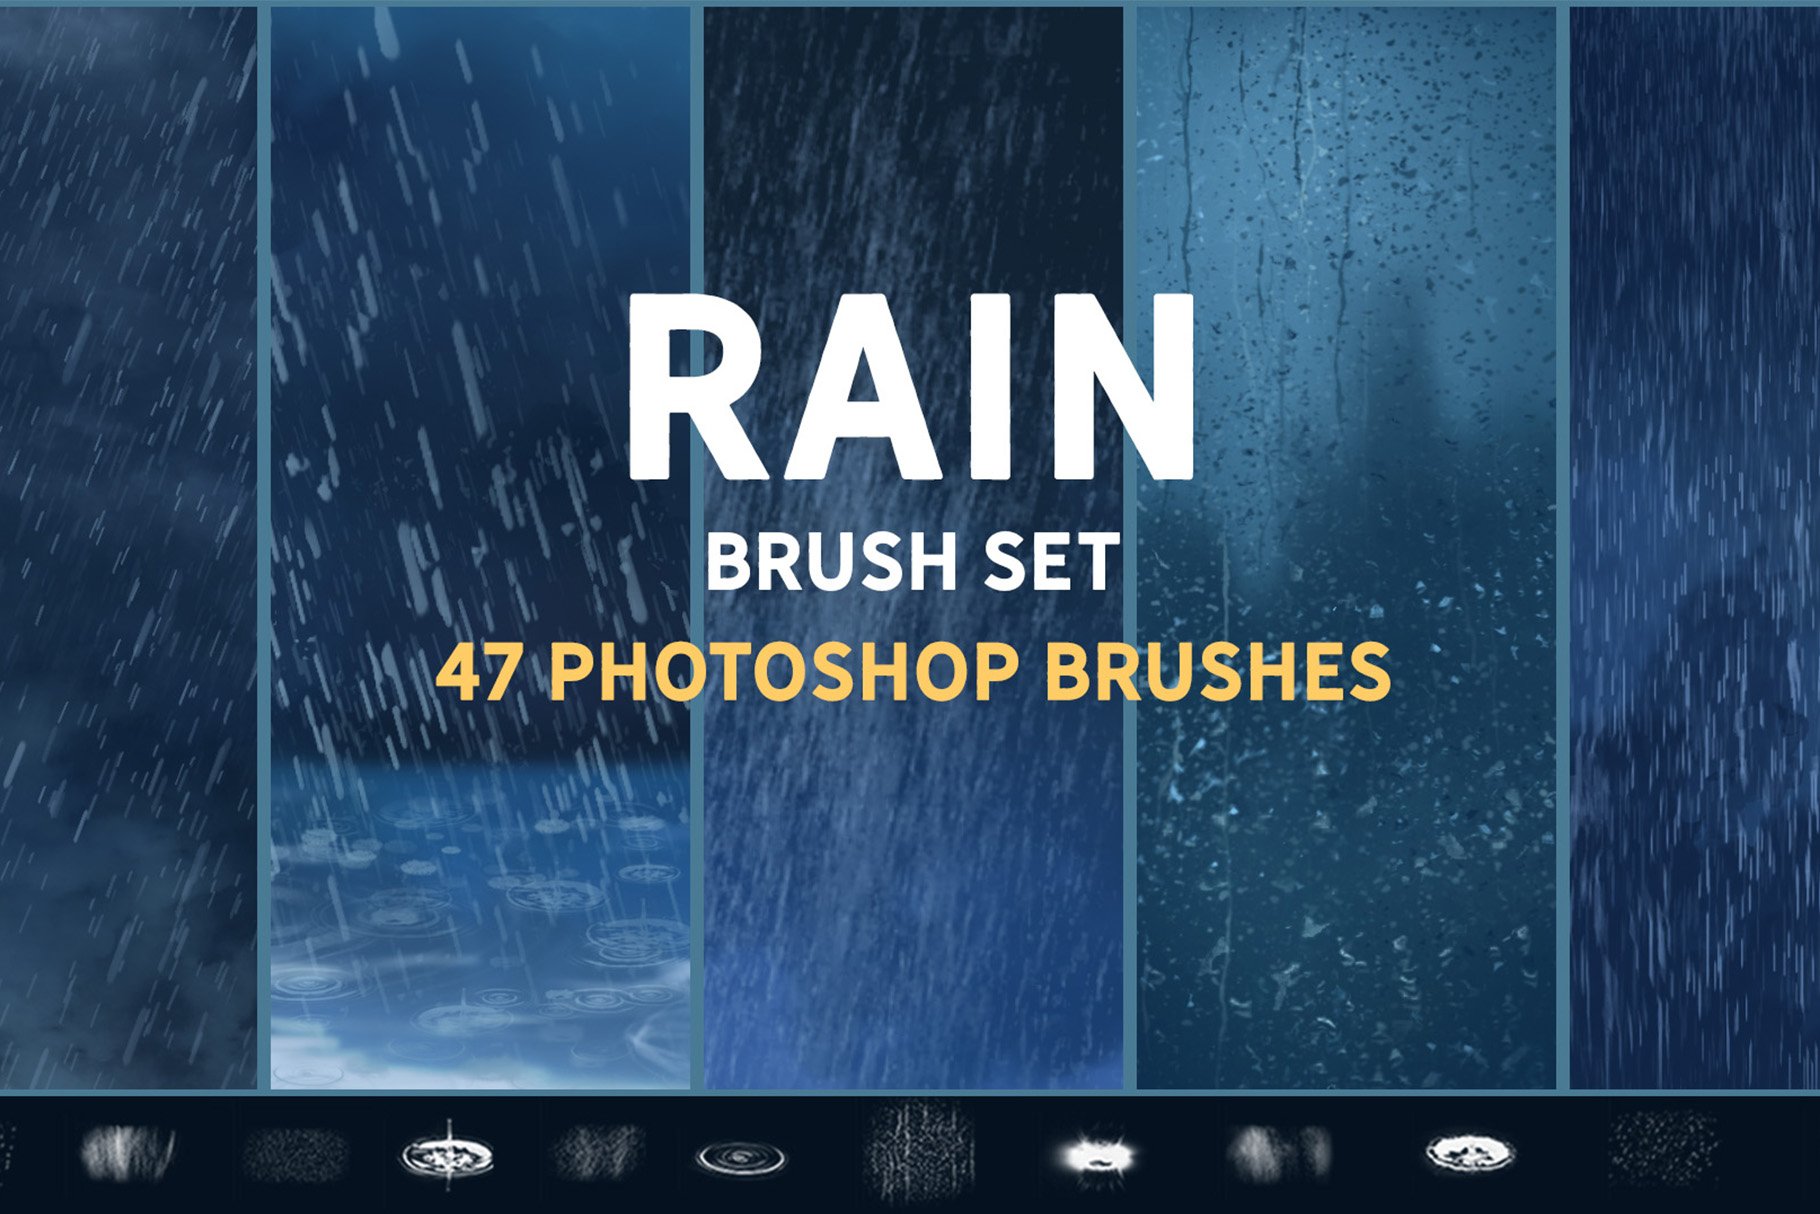 Rain brush setcover image.